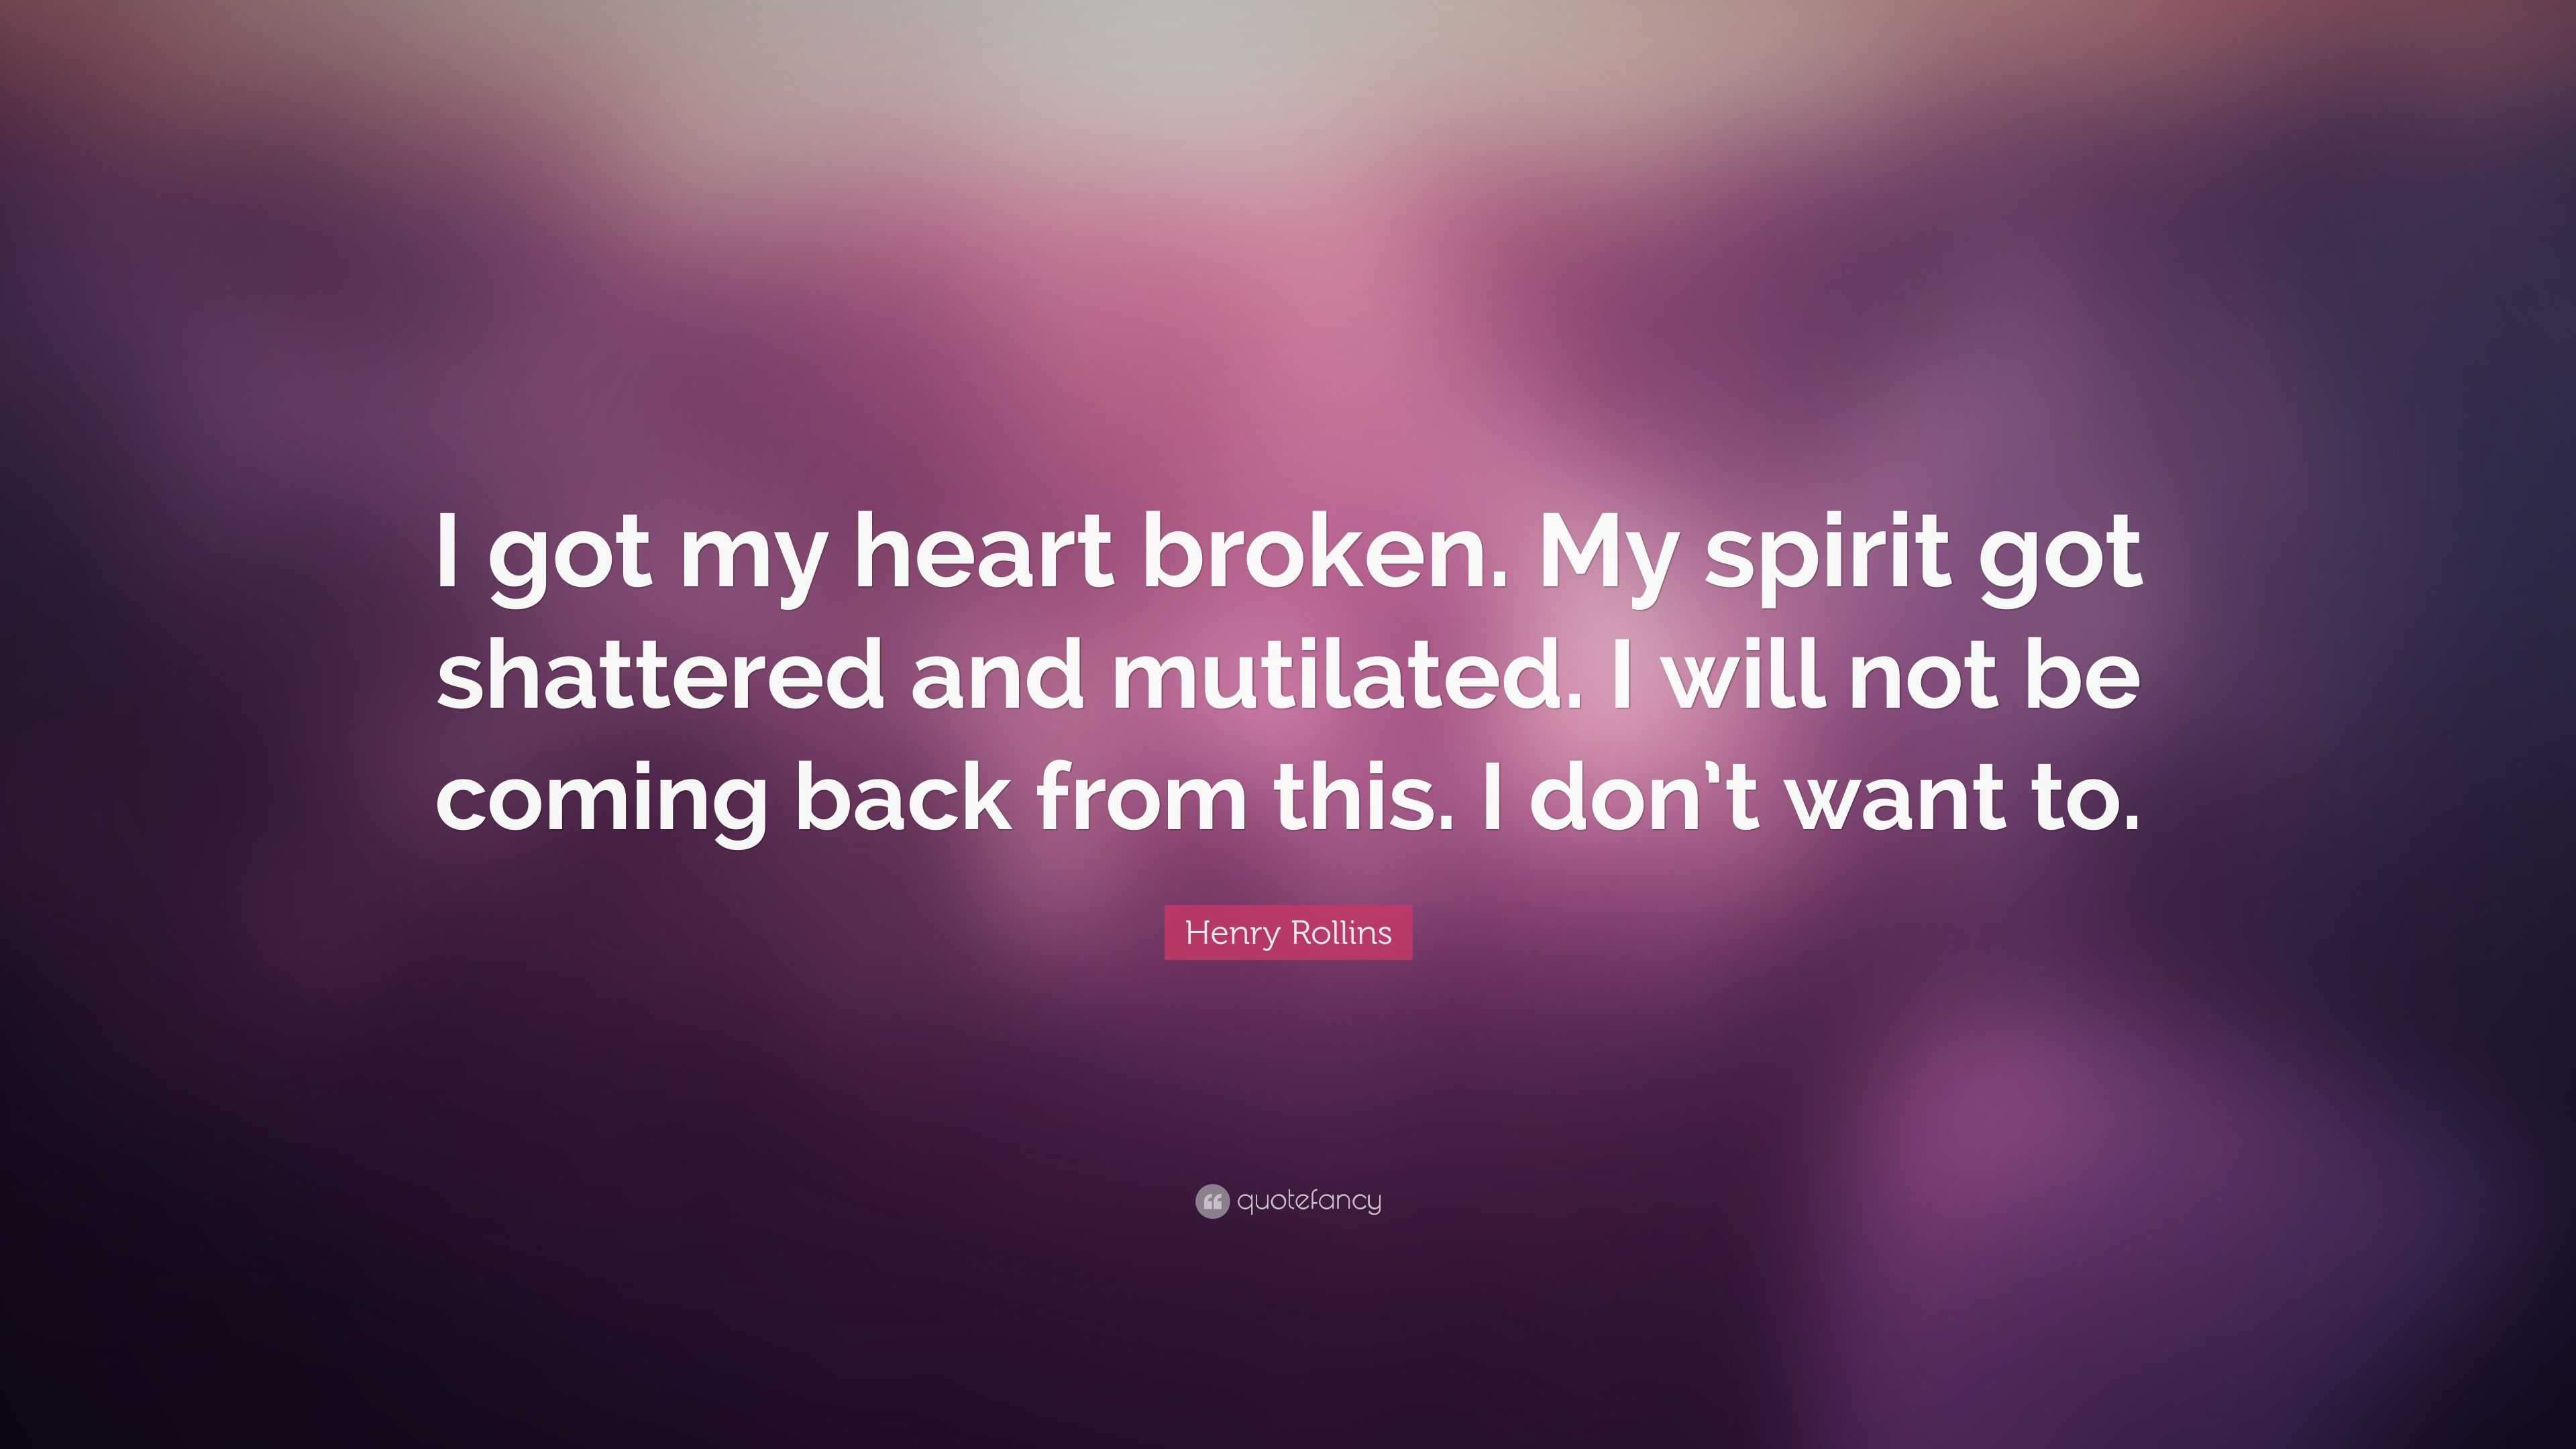 Henry Rollins Quote: “I got my heart broken. My spirit got shattered